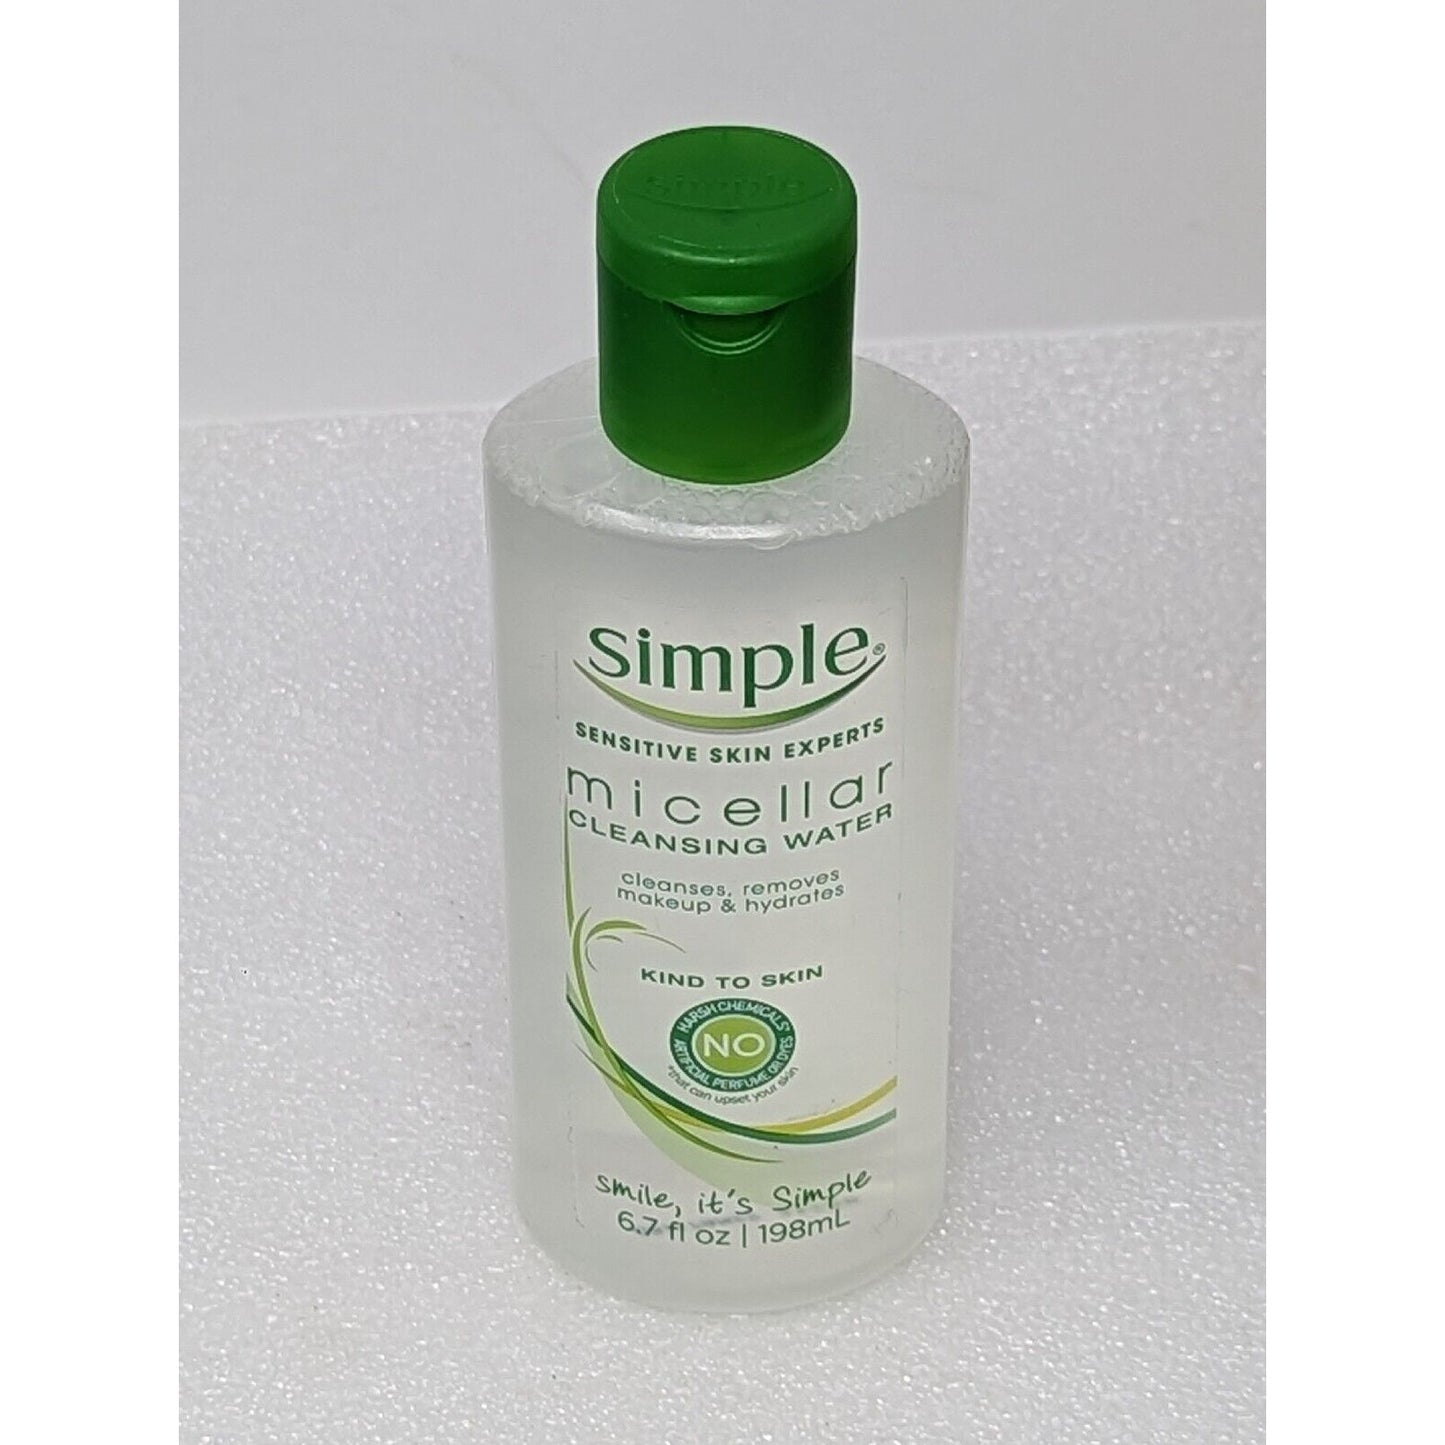 Simple Sensitive Skin Kind to Skin Cleansing Micellar Water 6.7 oz